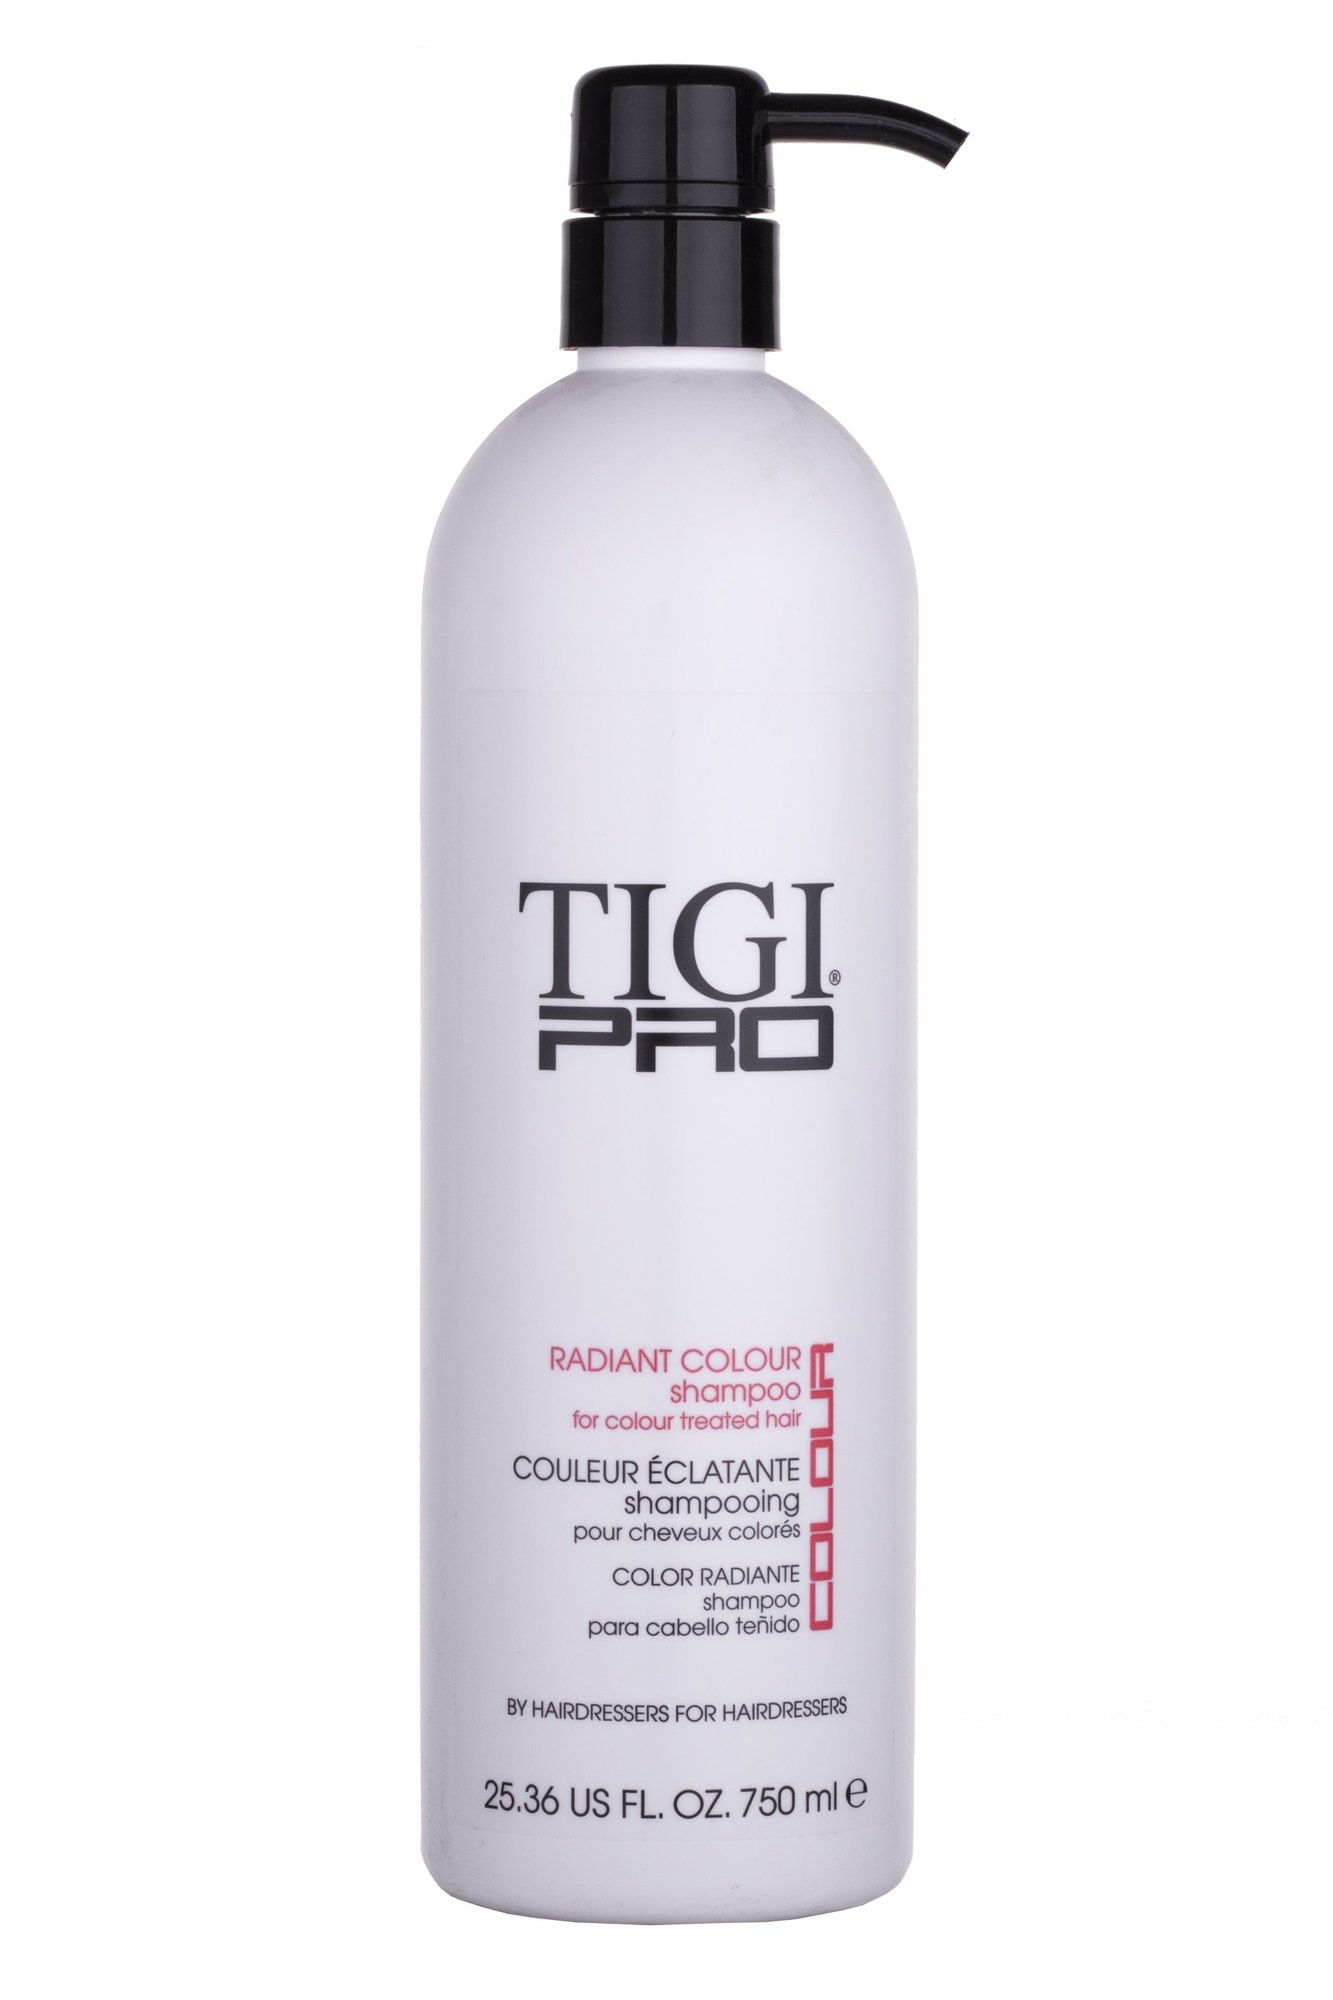 Tigi Pro Radiant Colour Shampoo